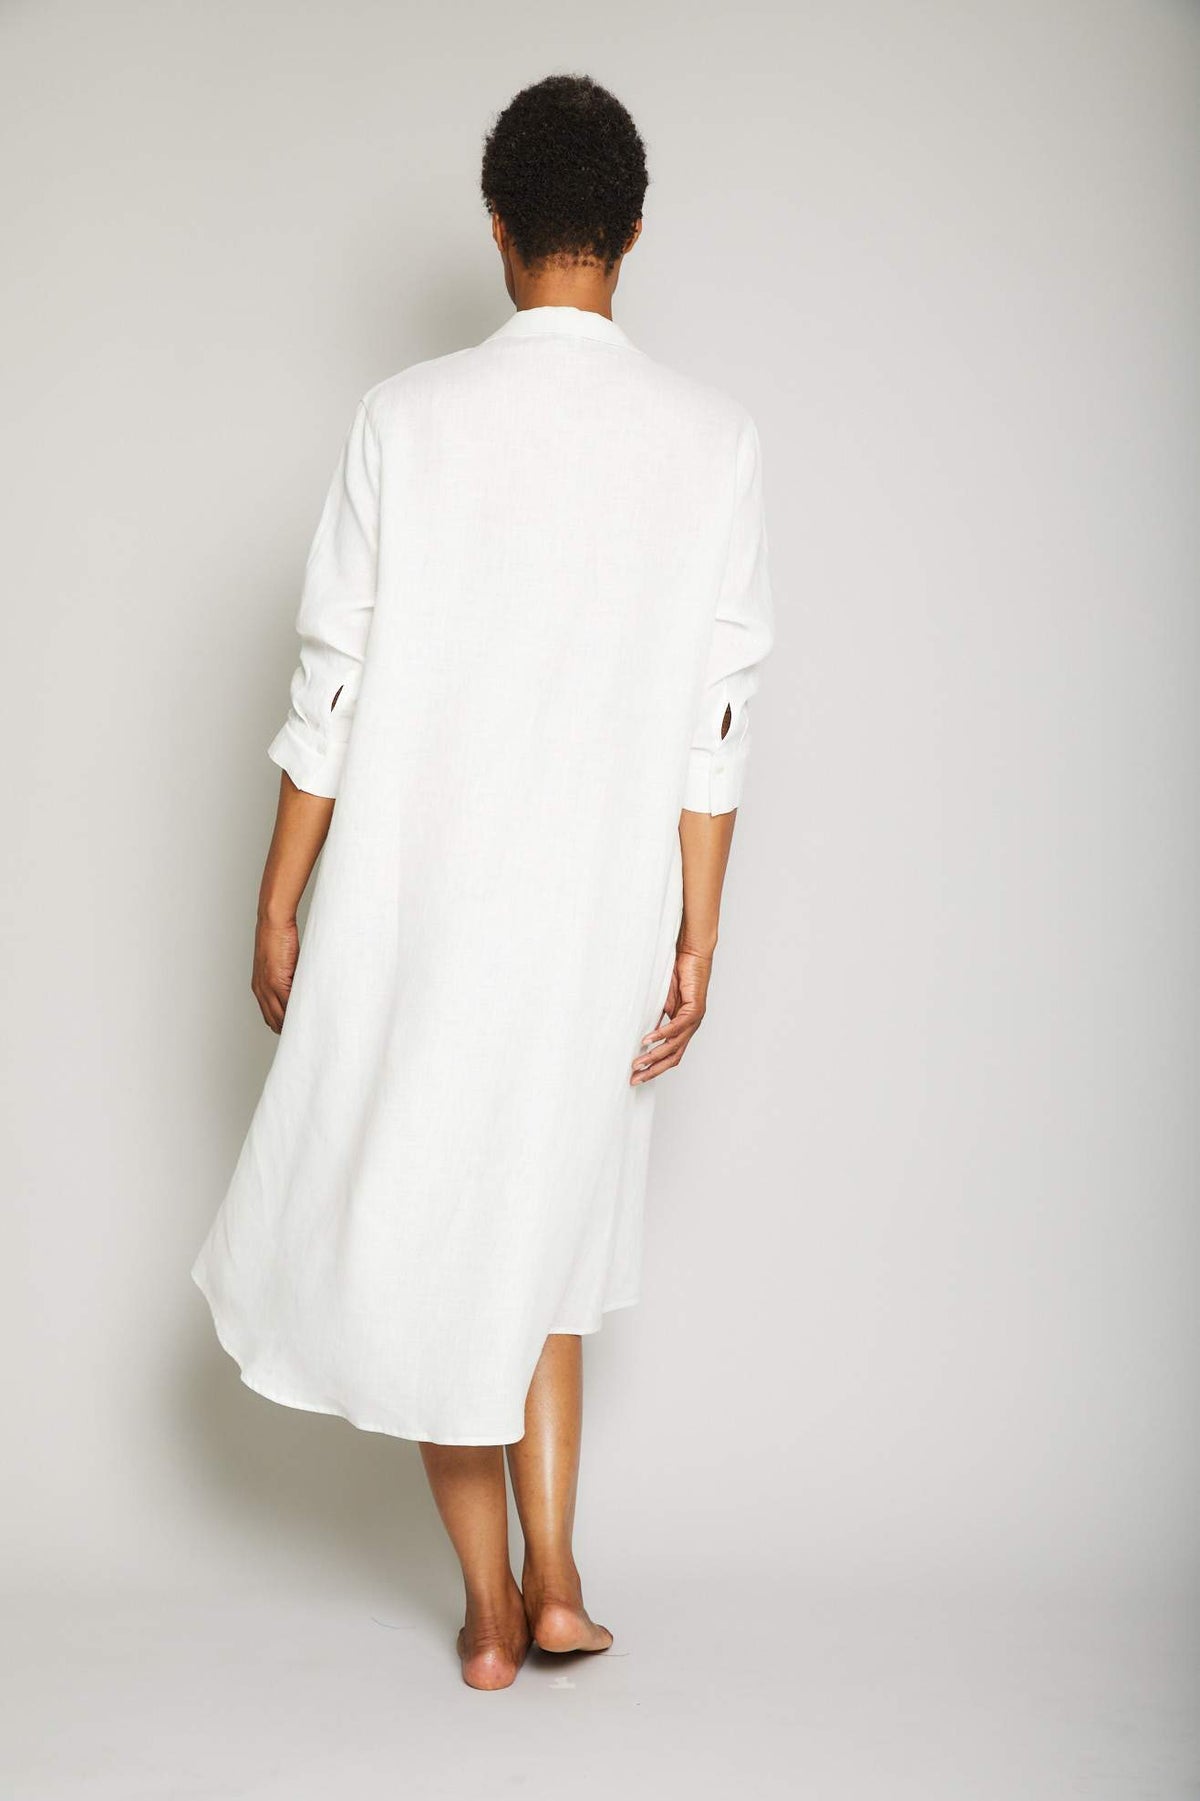 Linen Button Front Dress in Cream